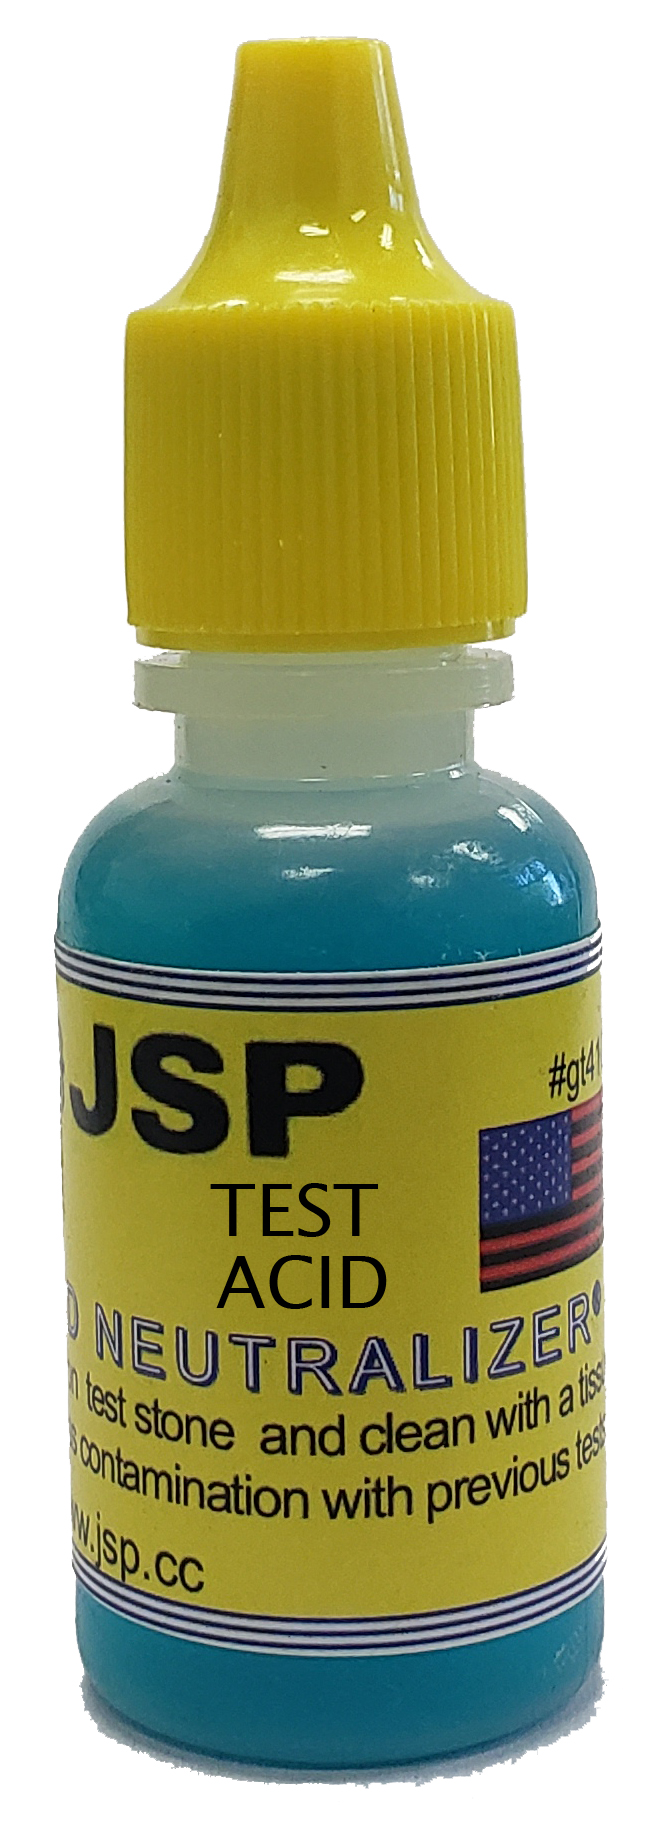 JSP TEST ACID NEUTRALIZER 1/2 OZ box of 12 - Click Image to Close